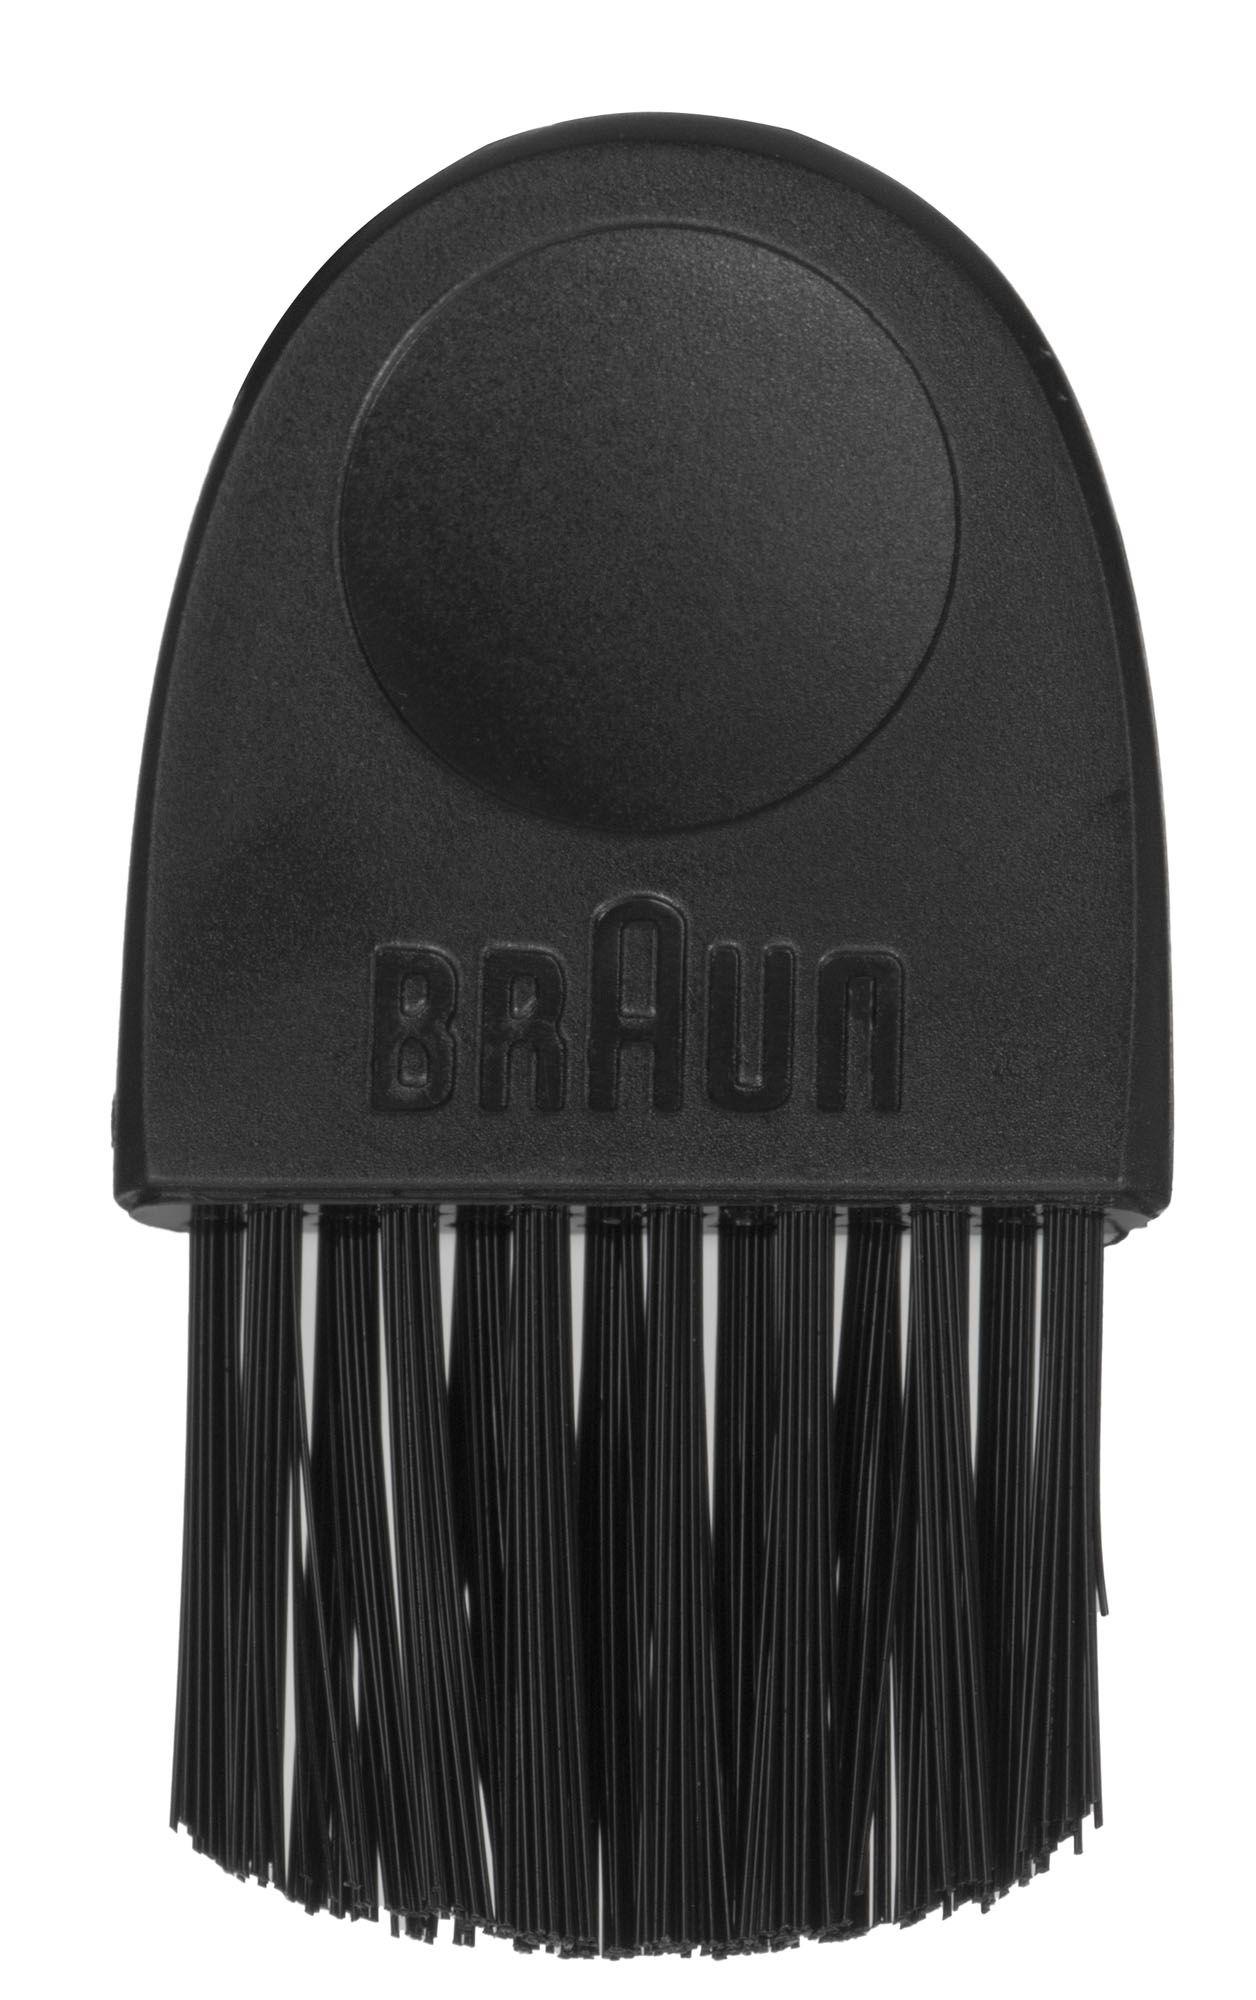 Braun Series 5 50-W4200cs Foil shaver Trimmer White